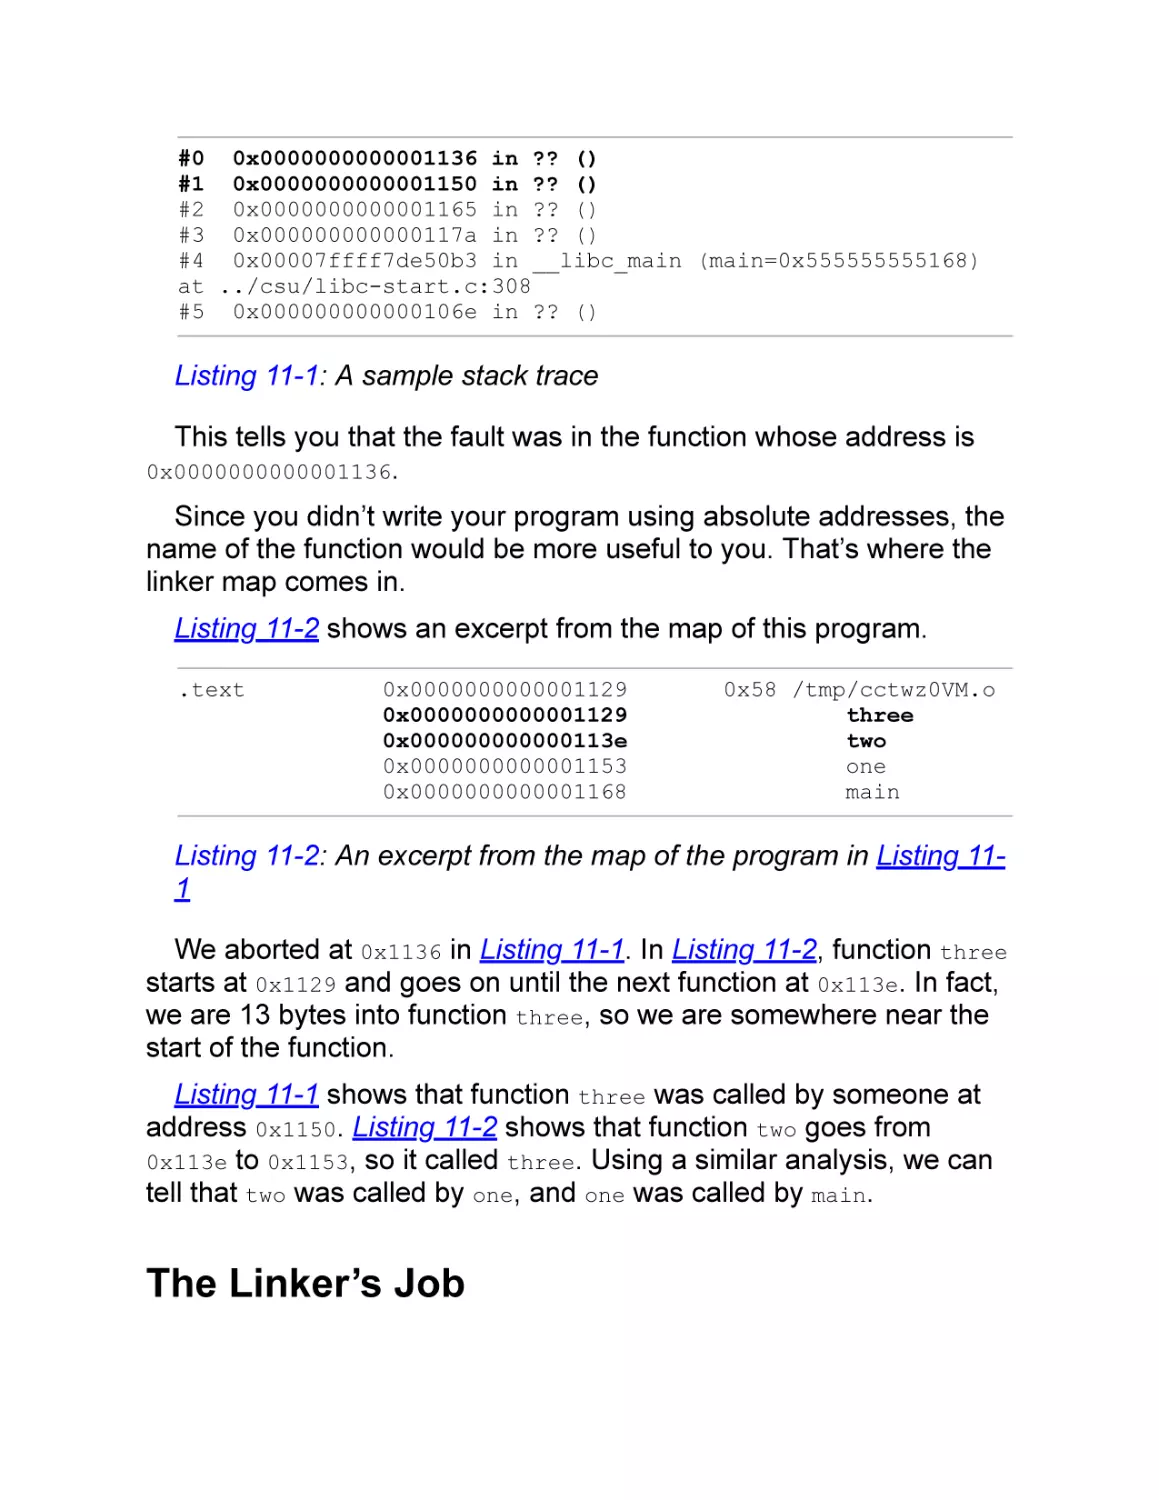 The Linker’s Job